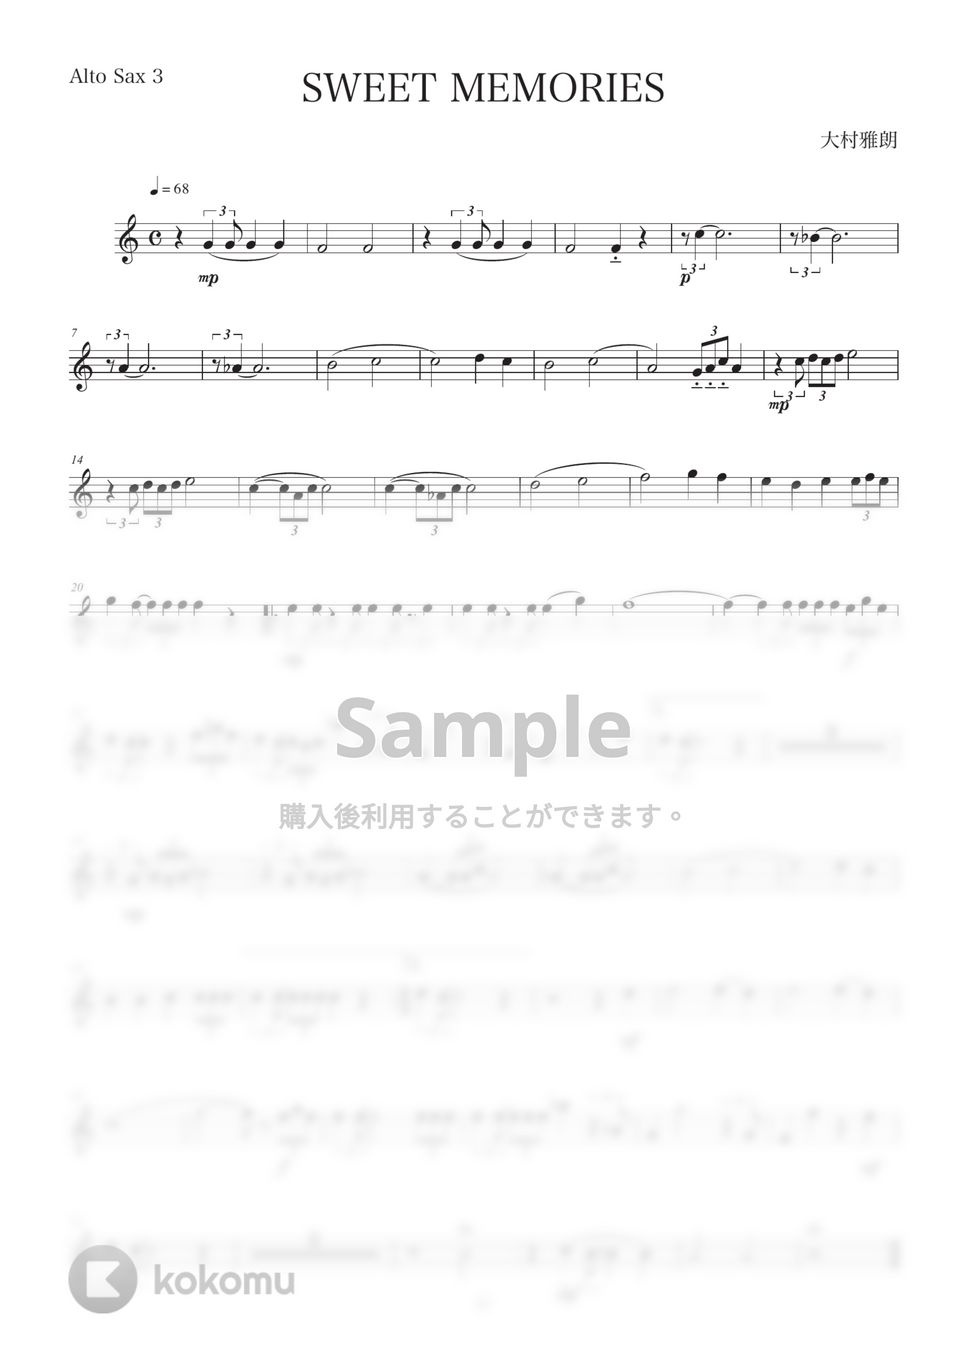 松田聖子 - SWEET MEMORIES (サックス5重奏（A/A/A/T/B）) by HiRO SAX